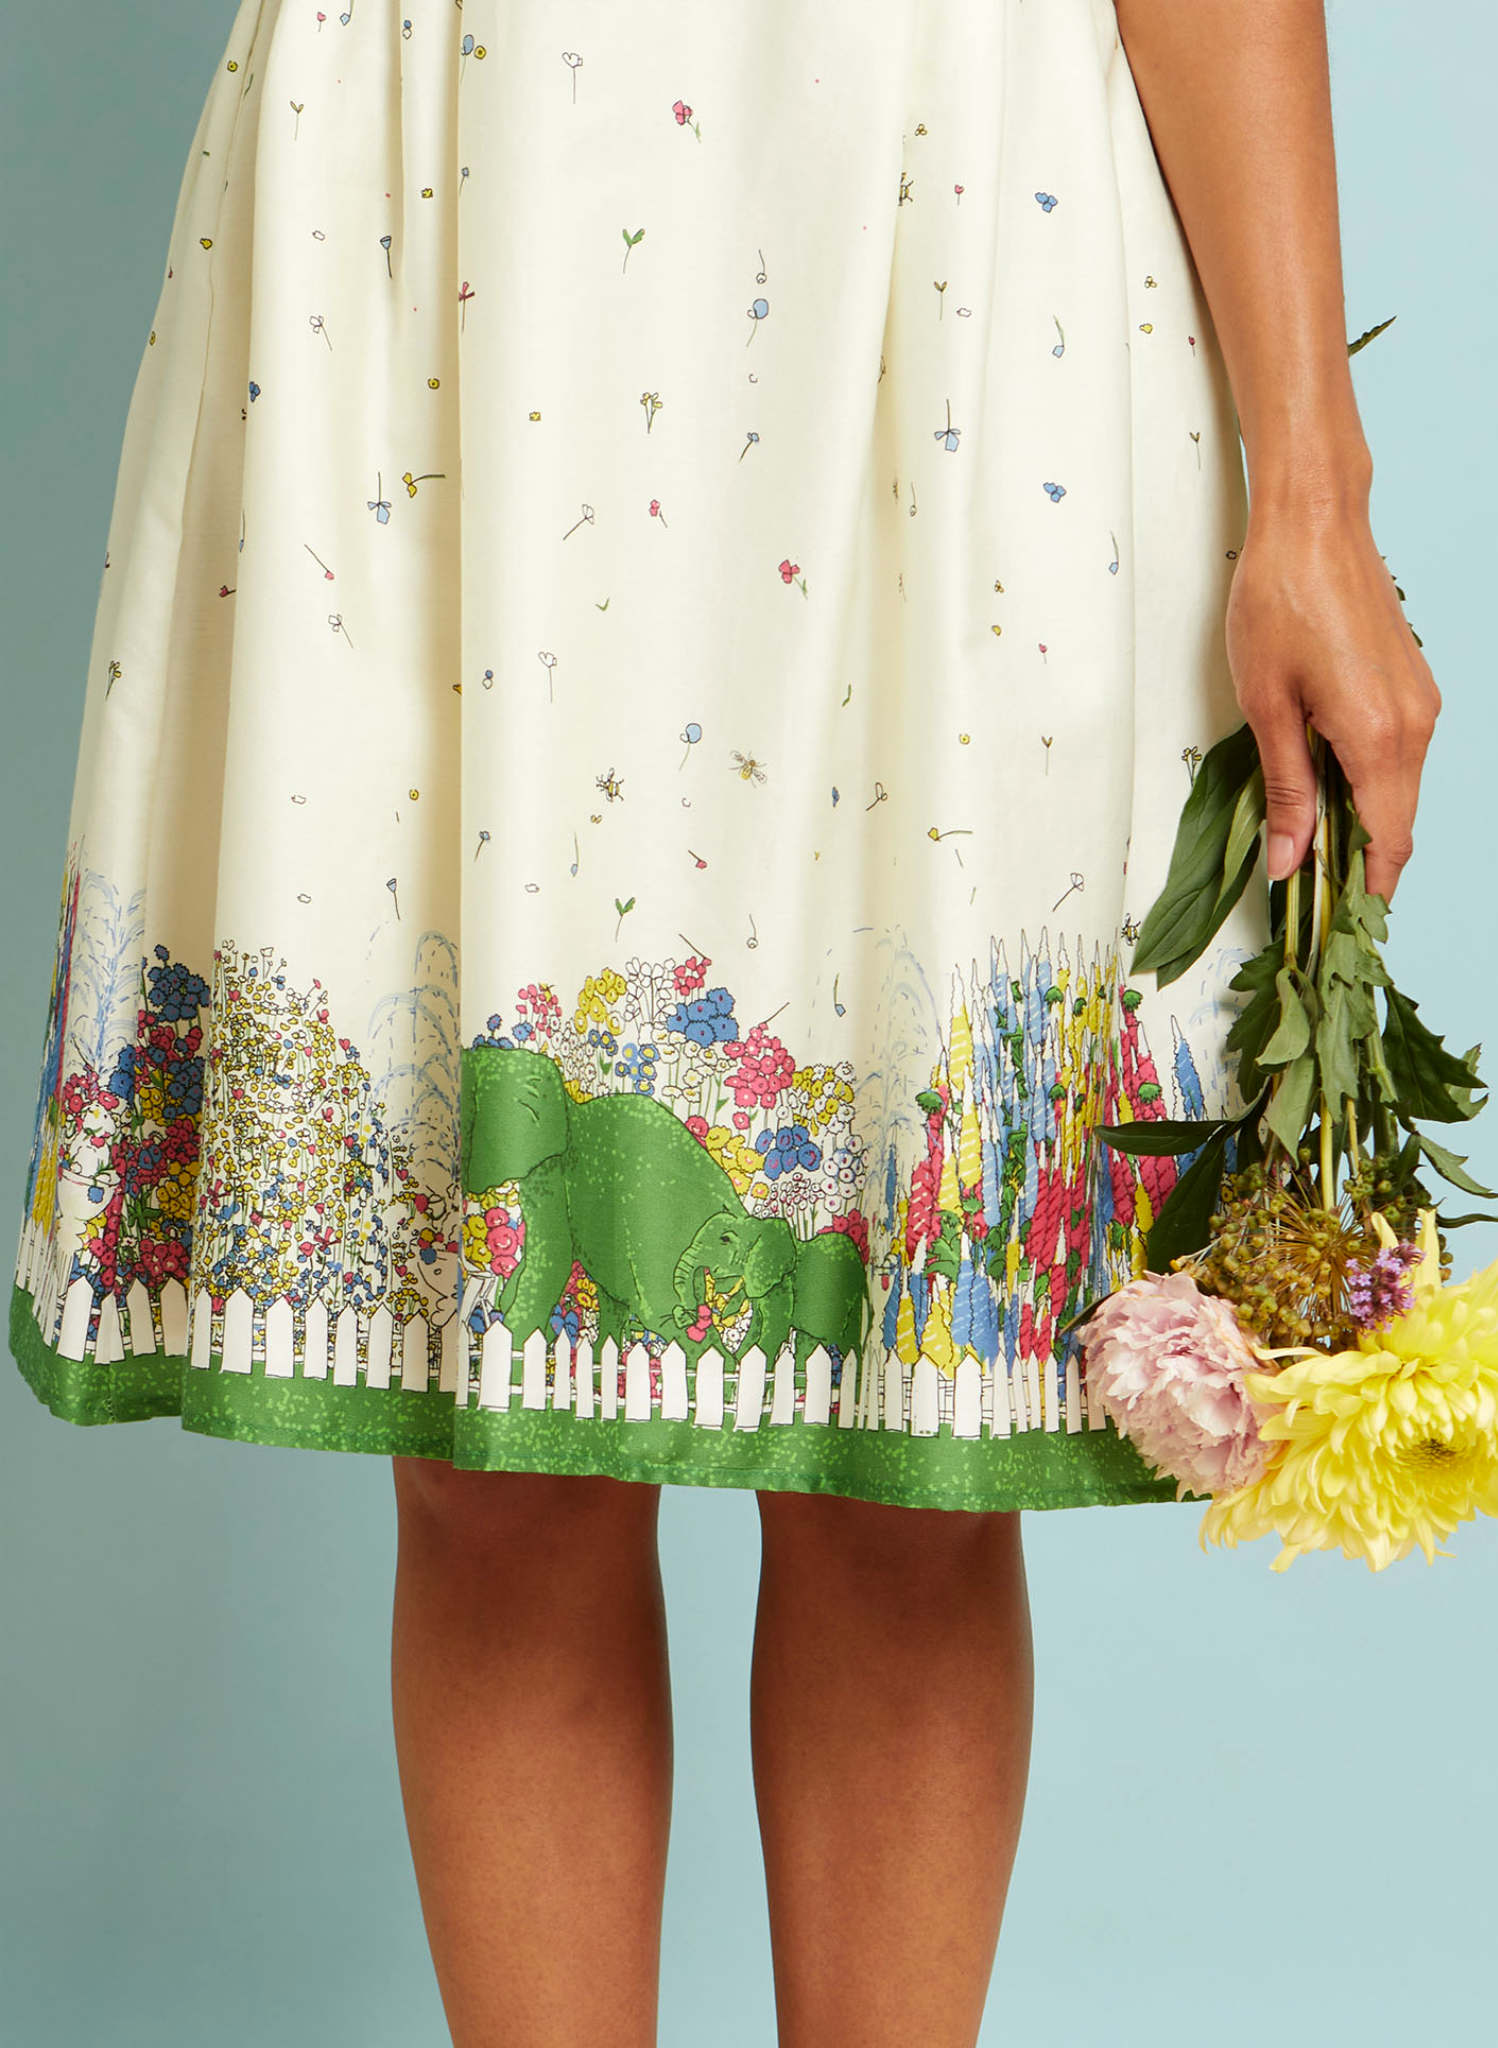 Beatrice Cap - Ivory Chelsea Flower Show Dress